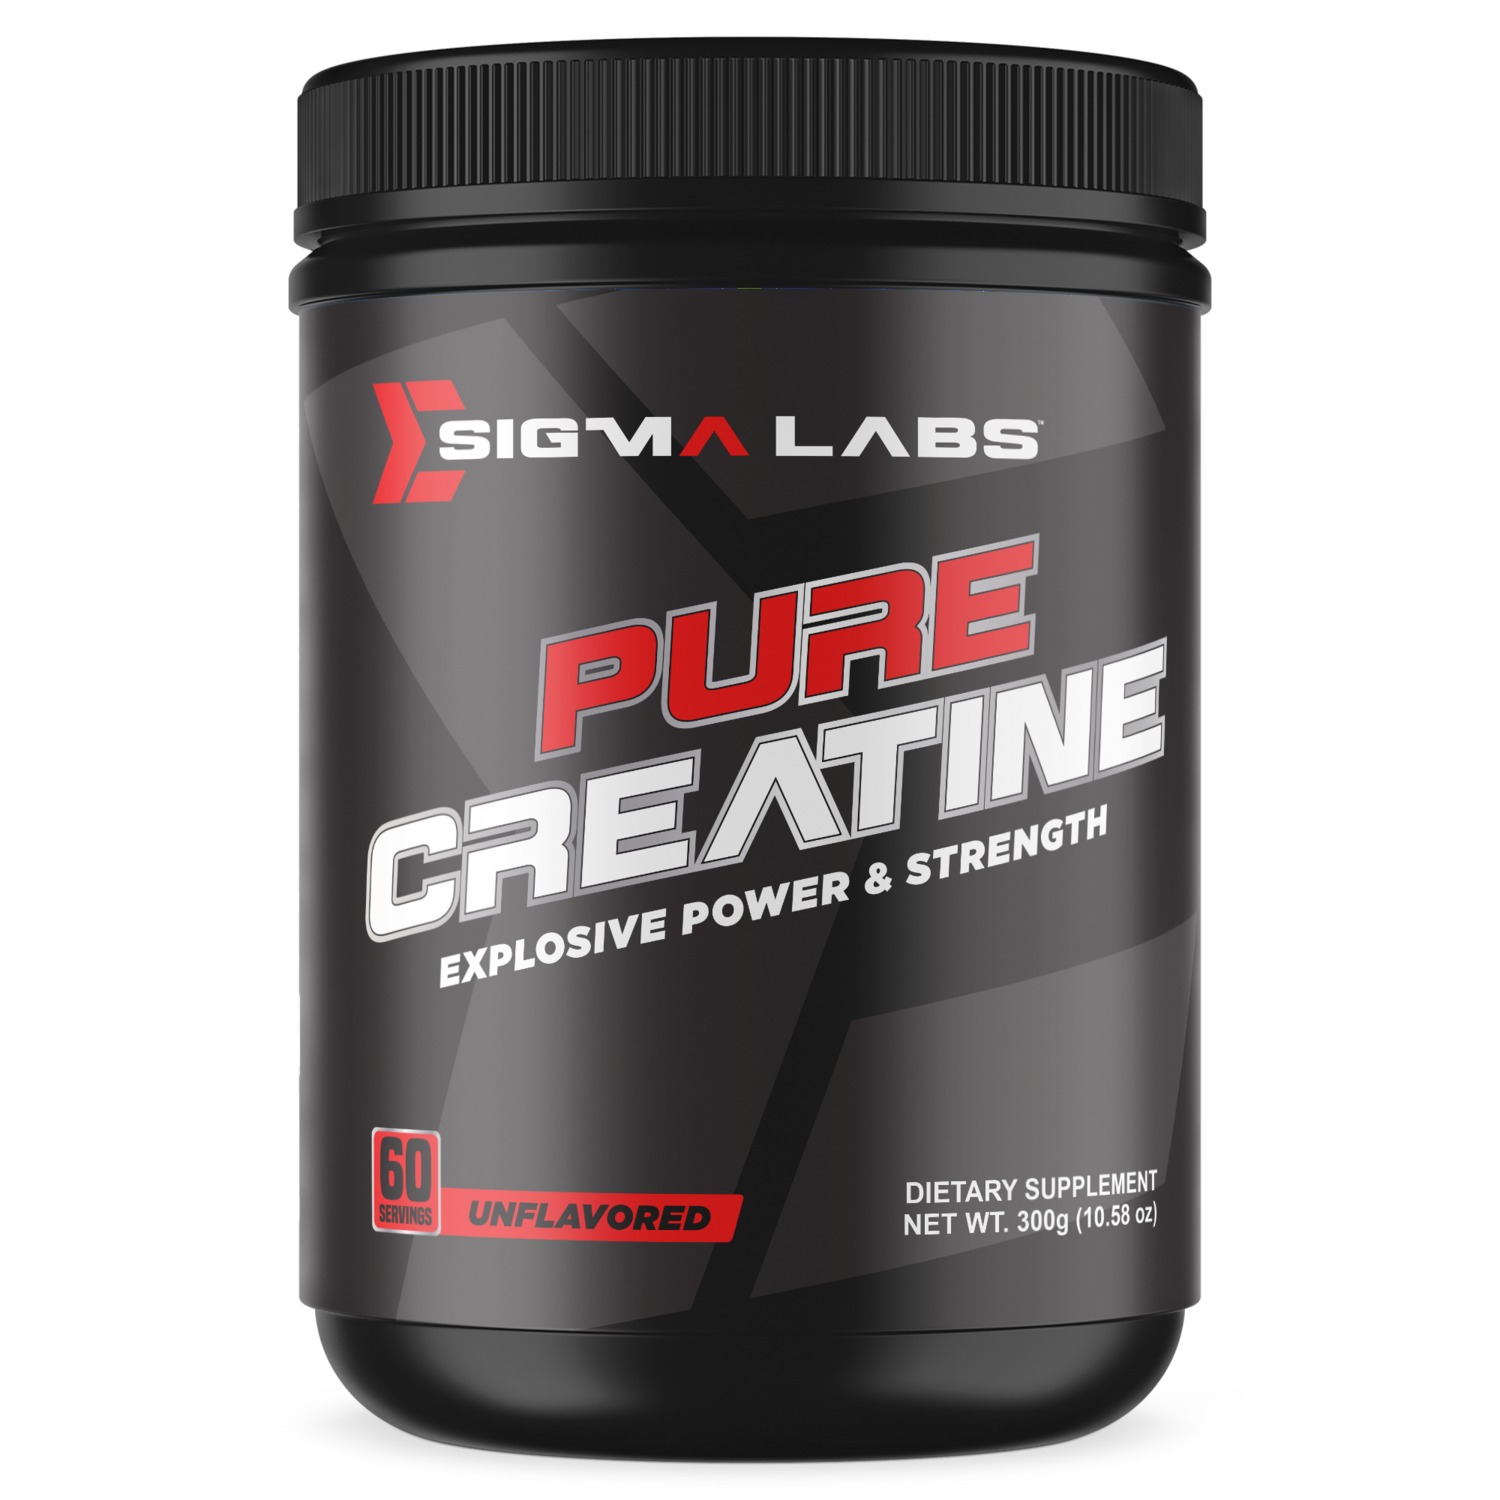 PURE CREATINE - Explosive Power & 
Strength 300g